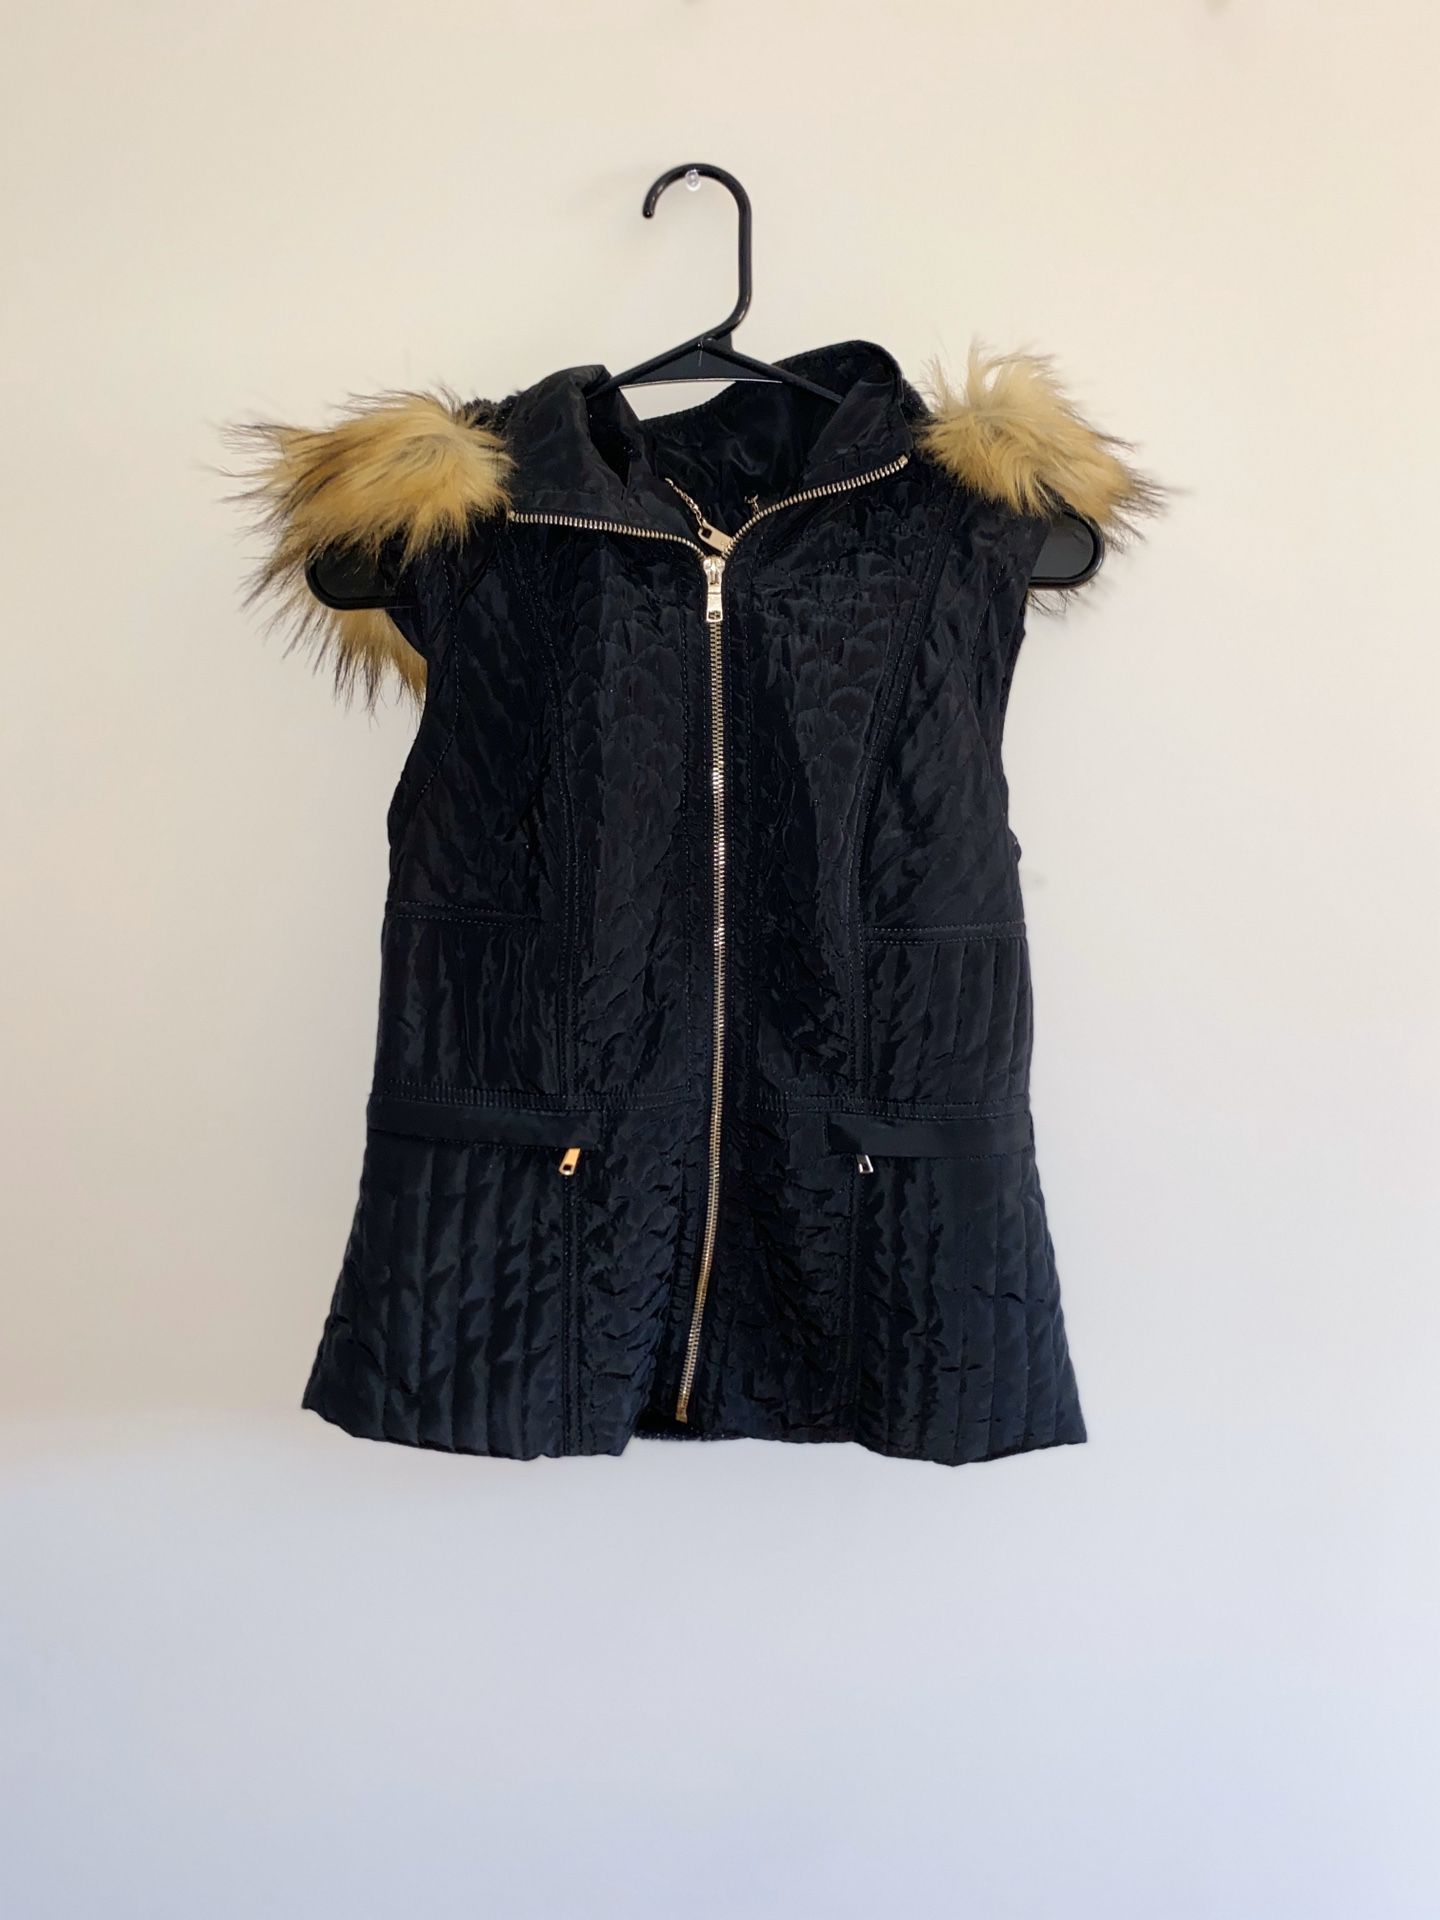 Coalition LA black hooded vest faux fur lining and hood